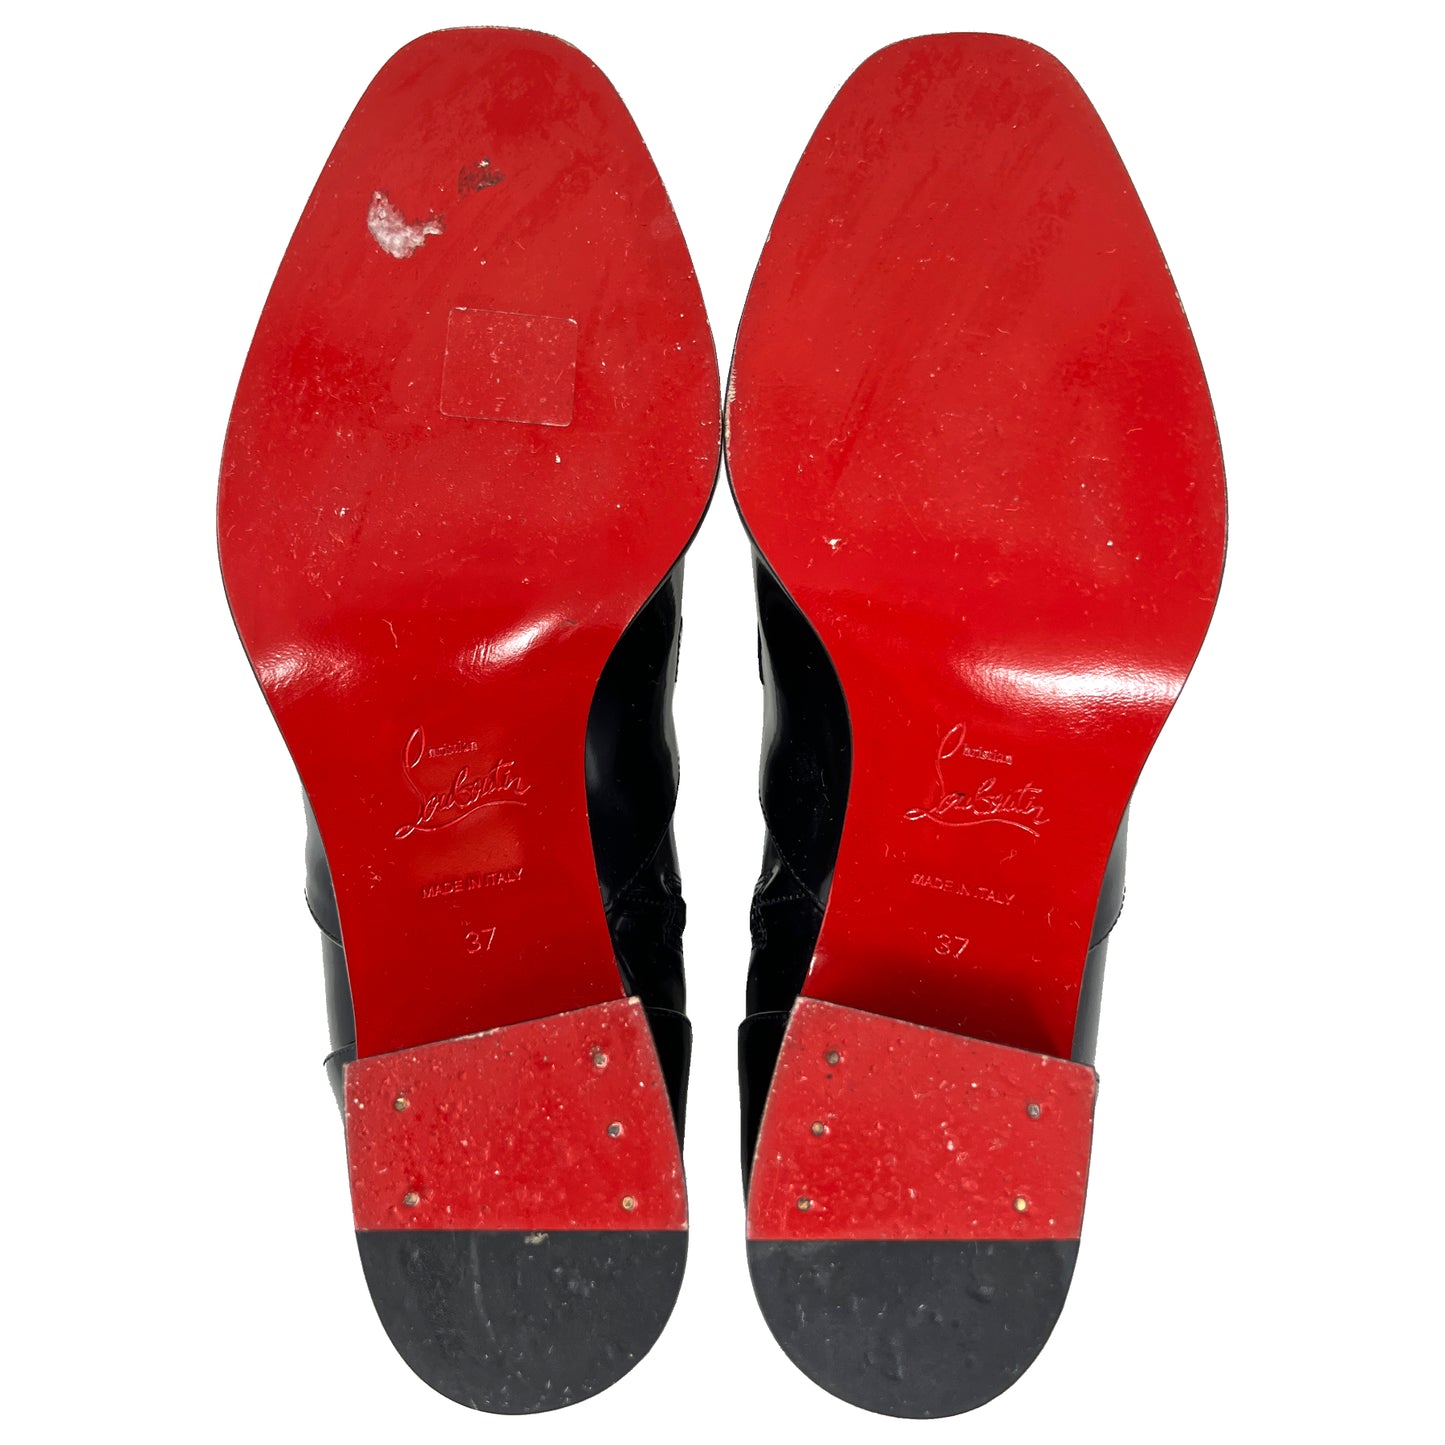 Christian Louboutin Mayerswing Donna 55 Ankle Boots Size EU 37